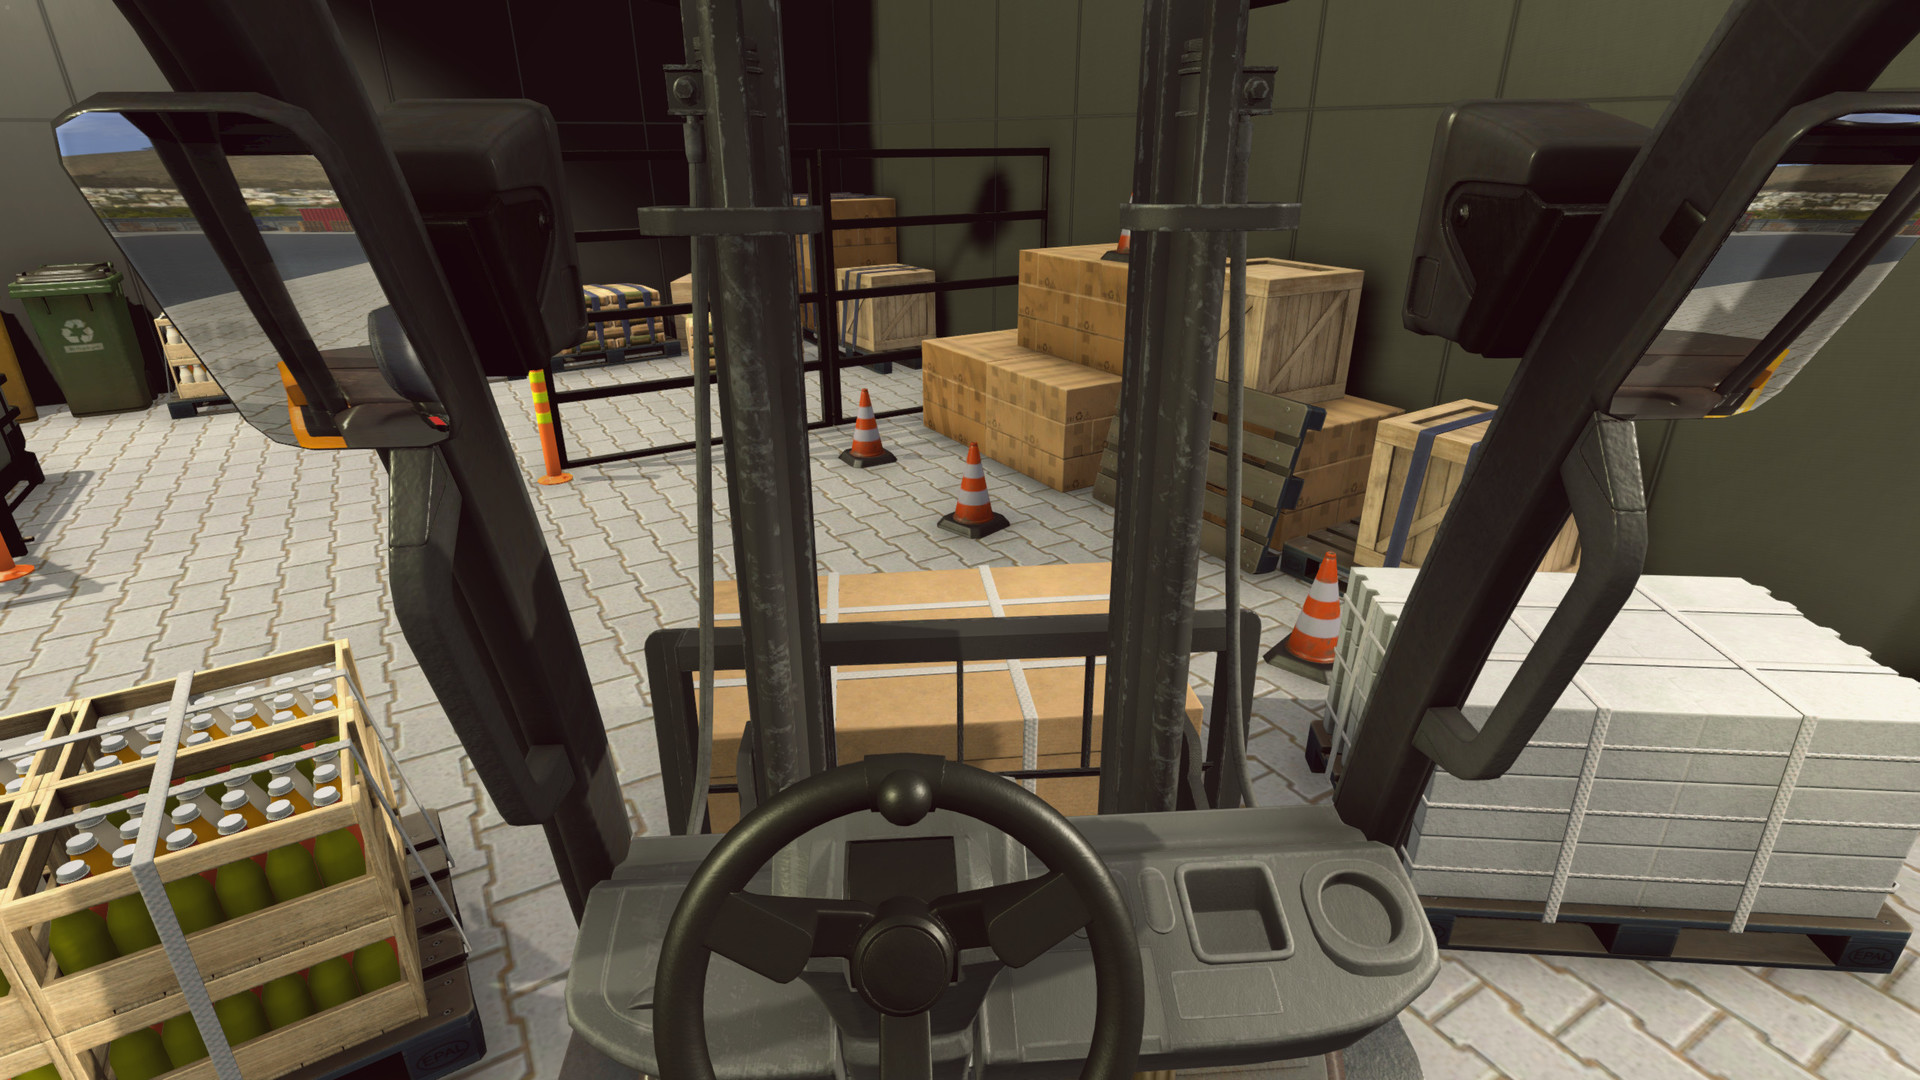 最佳叉车操作员 (Best Forklift Operator VR)